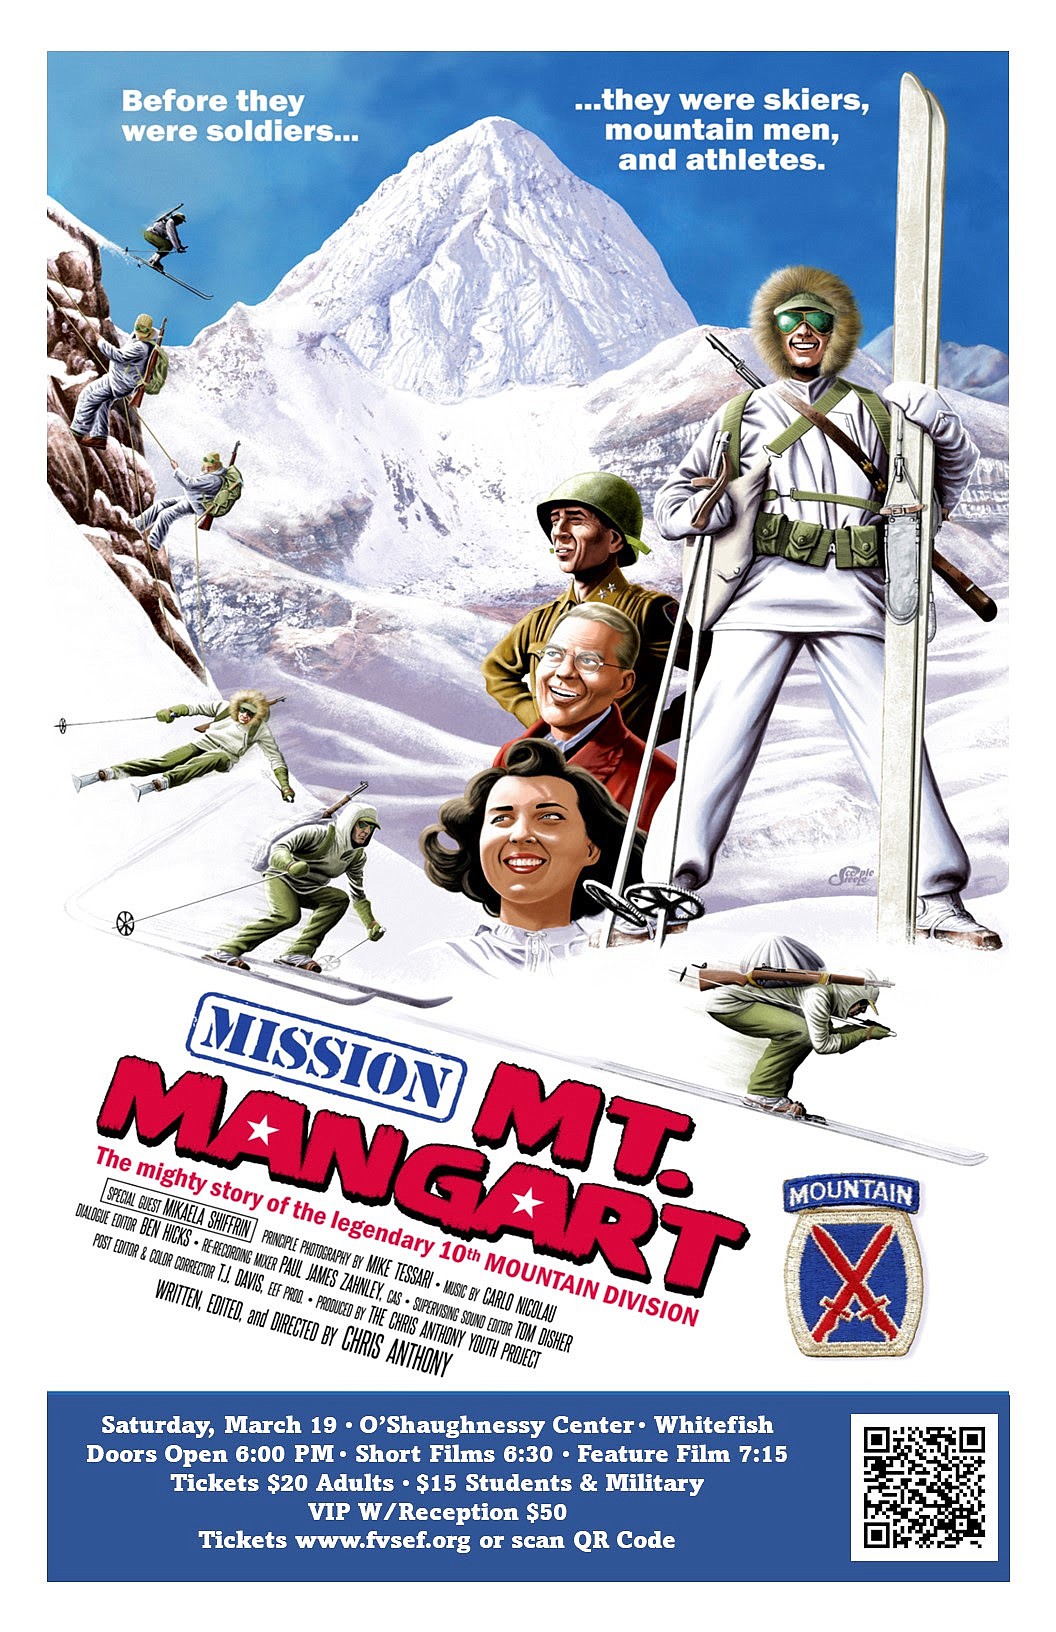 Mission: Mt. Mangart